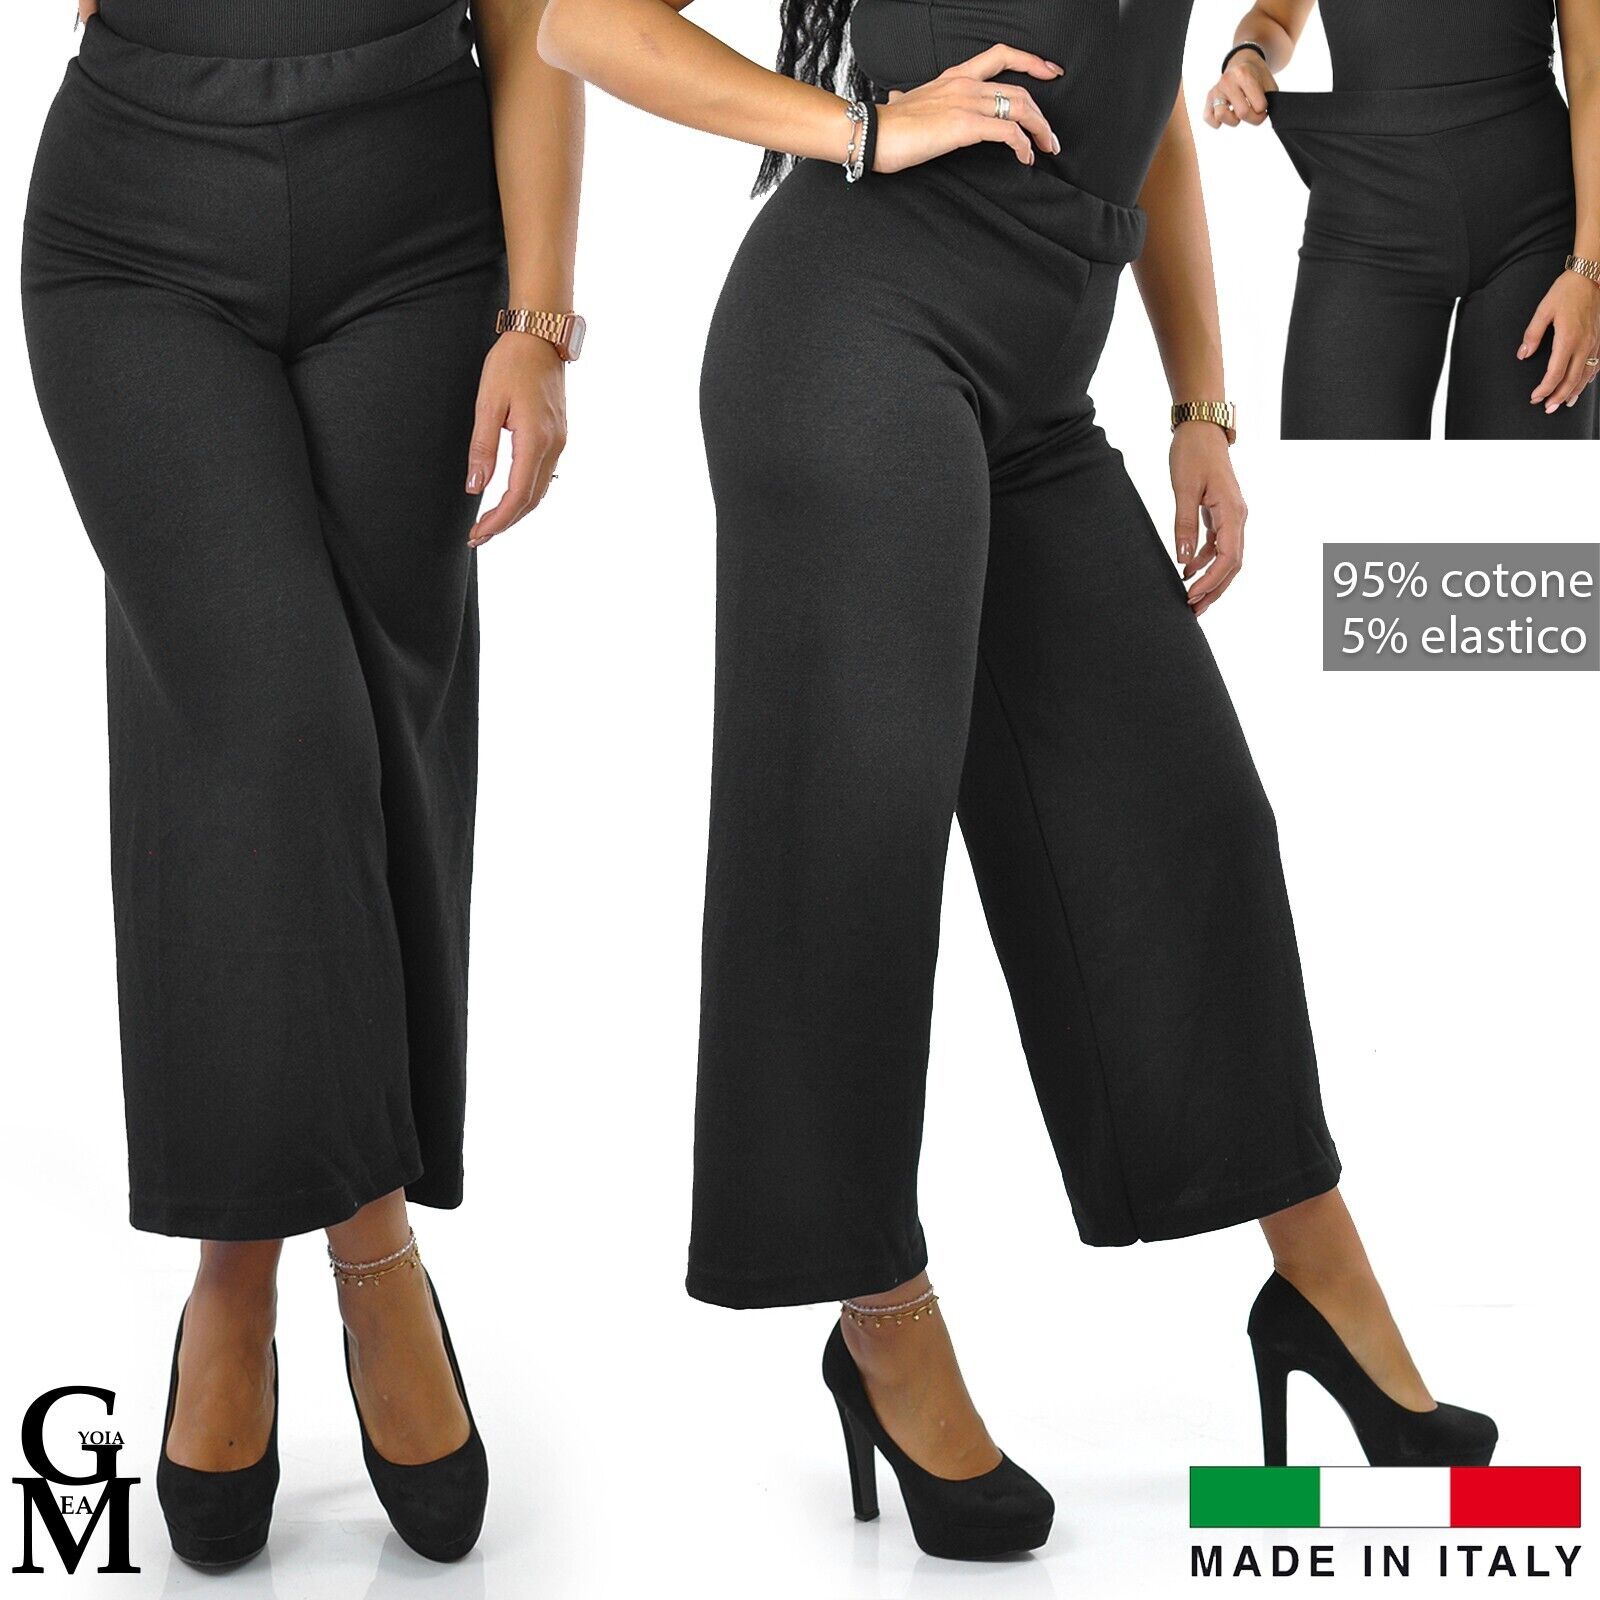 Pantalone largo pantapalazzo donna nero elasticizzato elegante italy m –  Gyoiamea